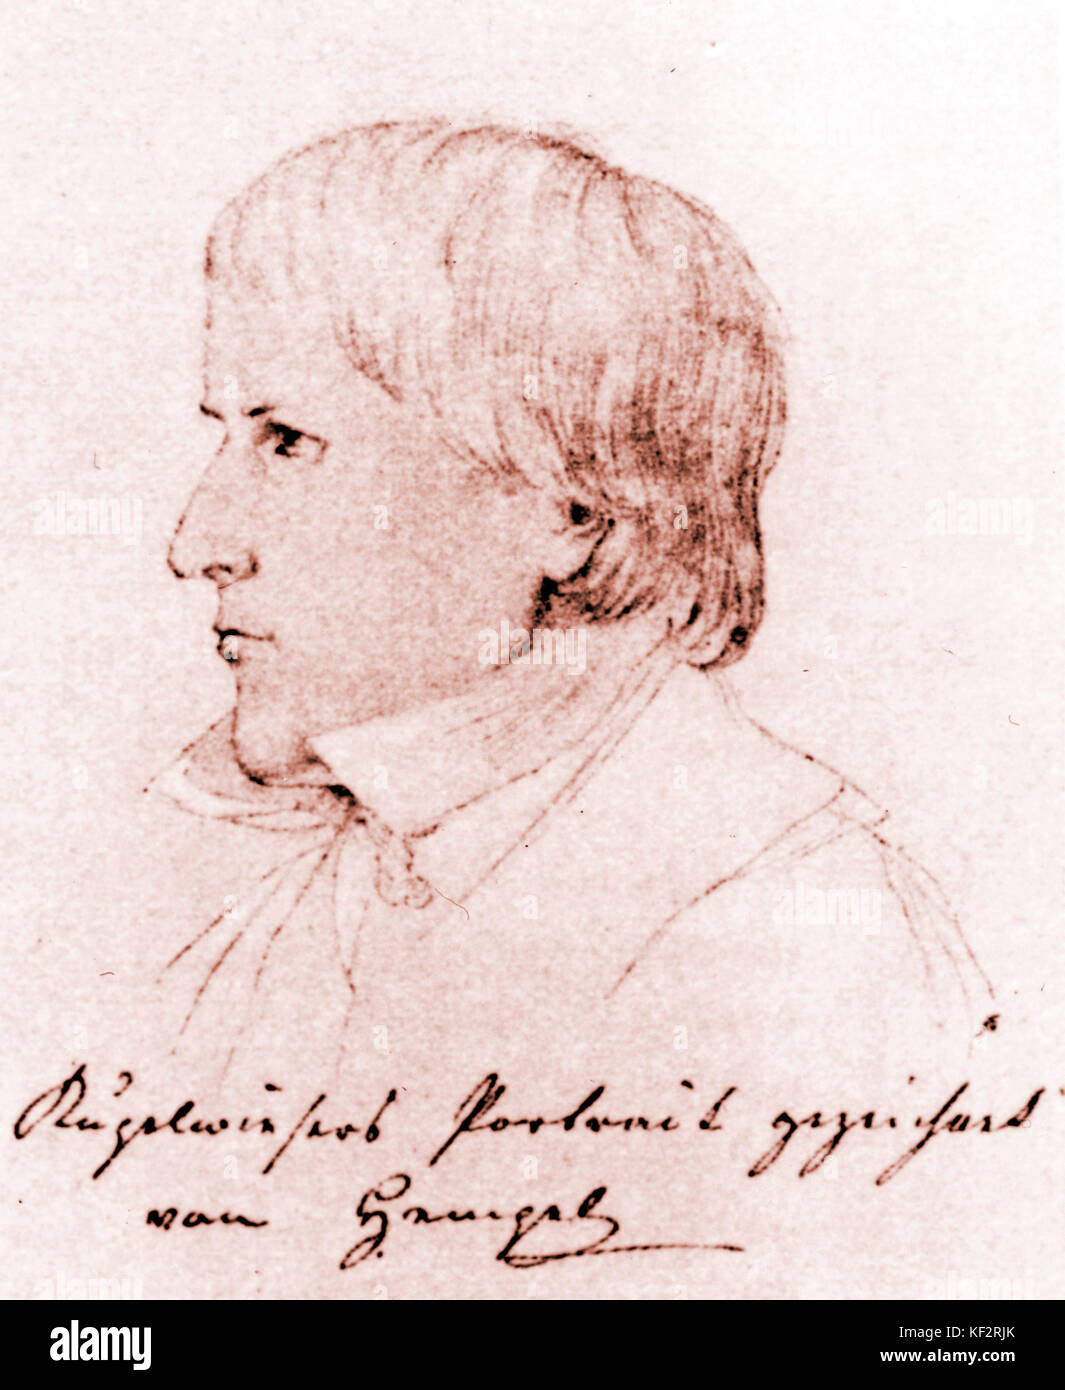 Kupelwieser, Leopold  - drawing by Josef von Hempel Stock Photo